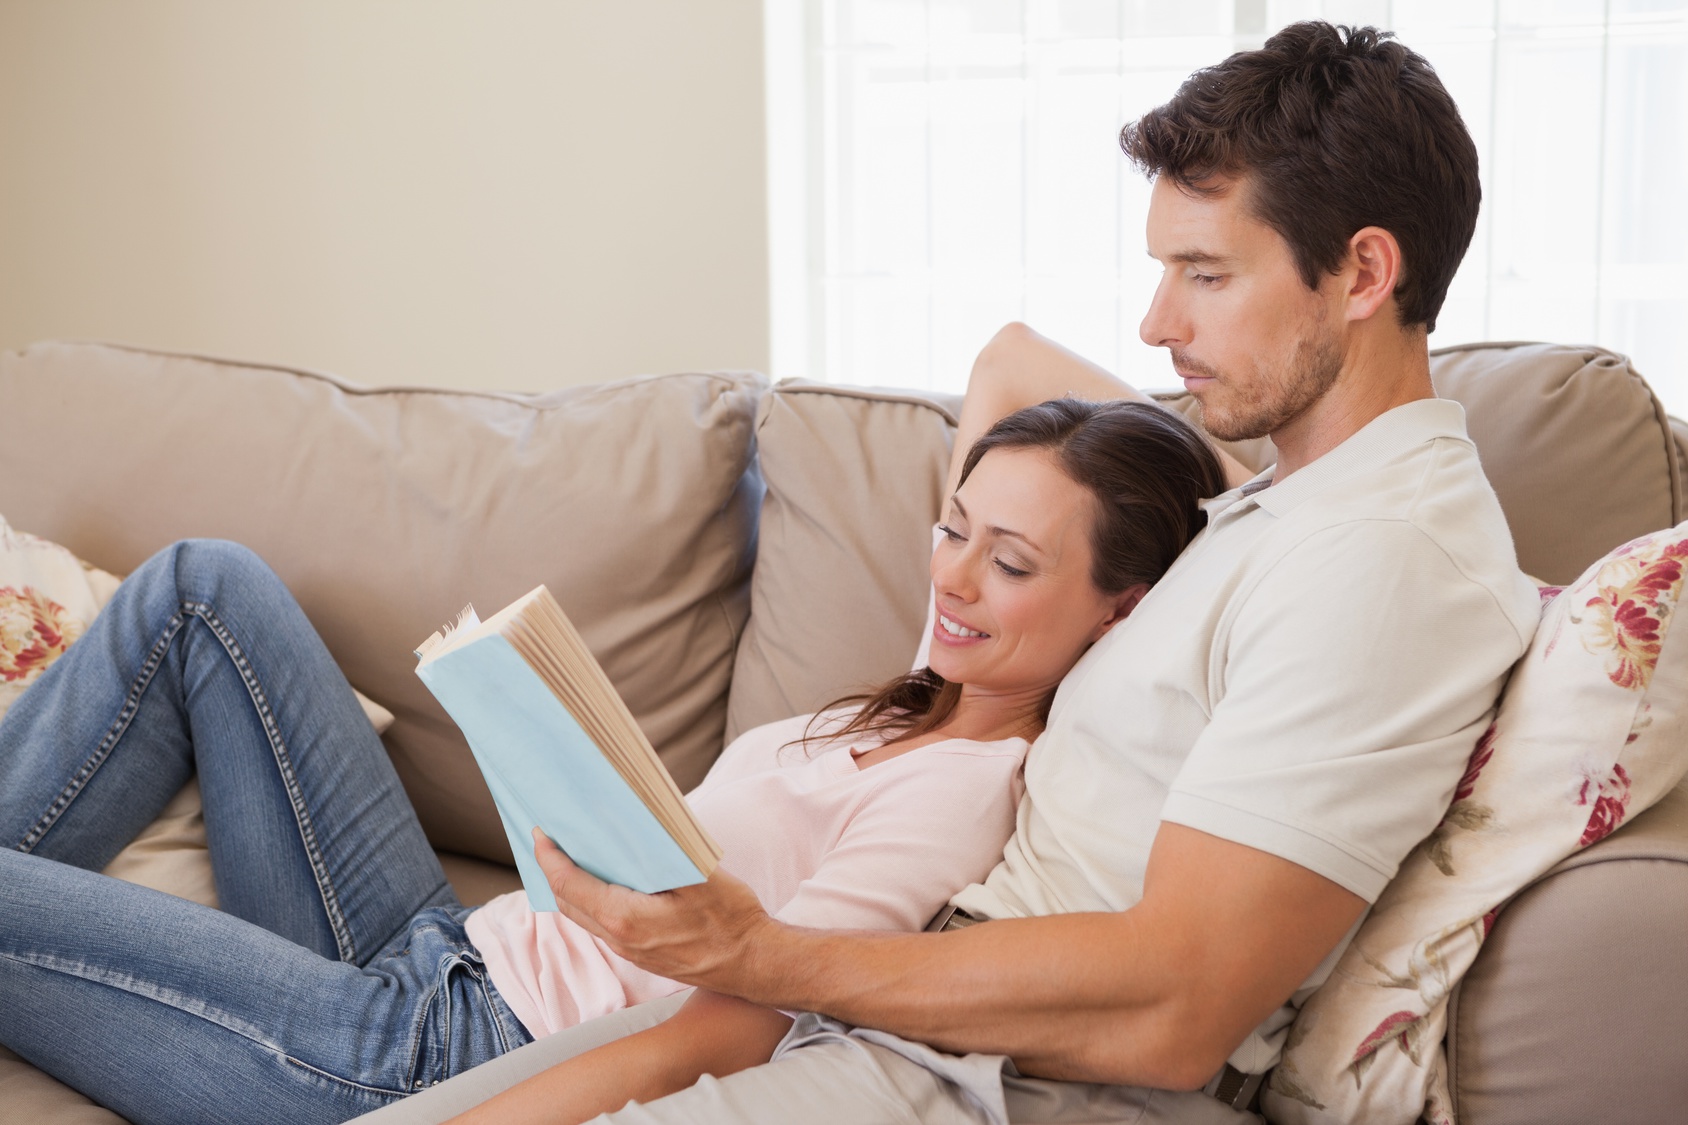 Wife together. Девушка с парнем на двинае. Парень и девушка на диване. Пара читает книгу. Диван для чтения.